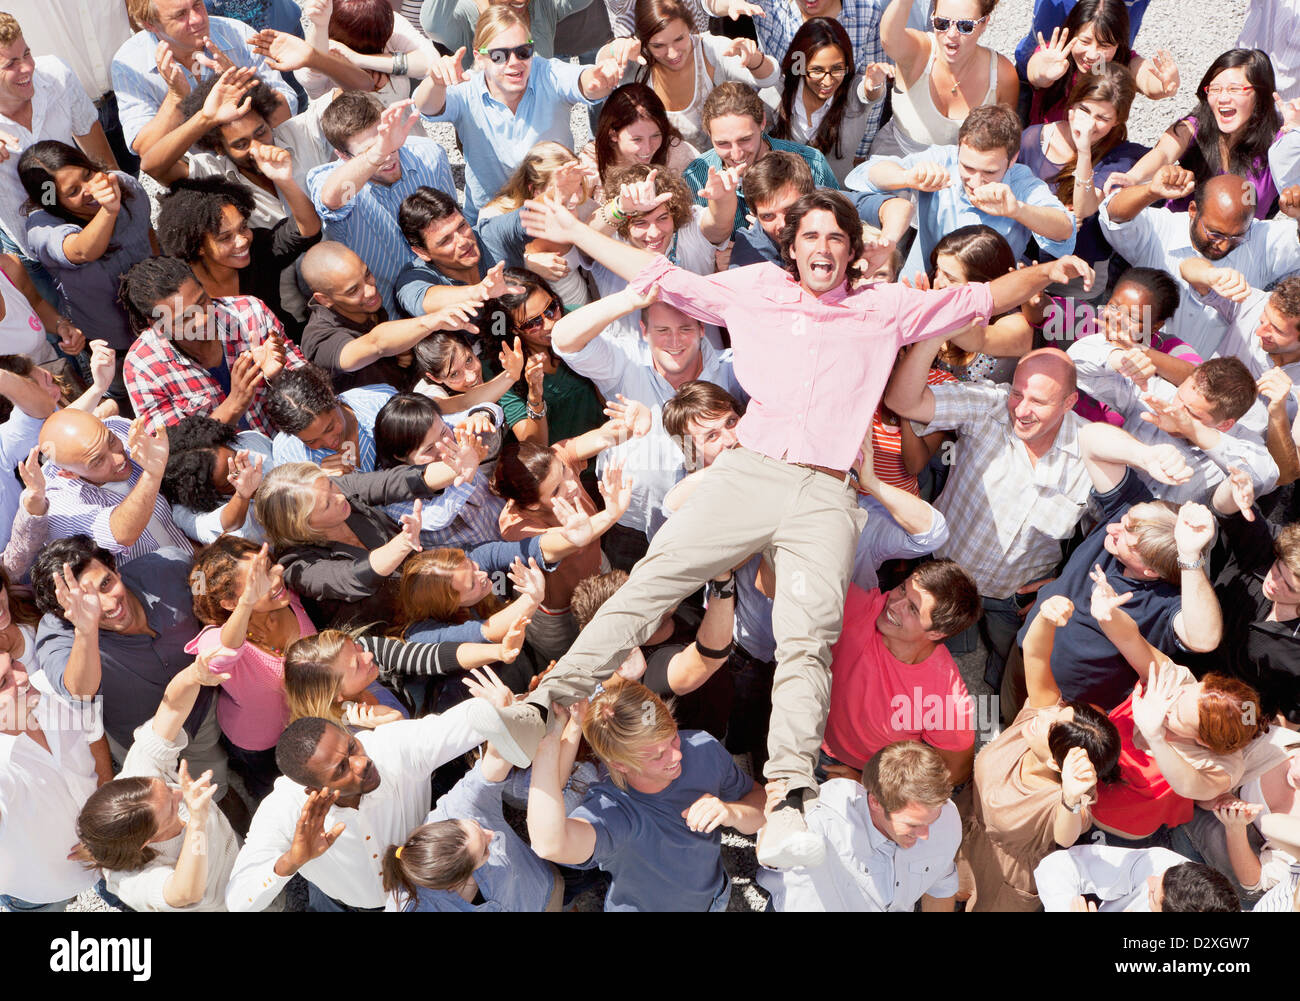 Portrait of enthusiastic man crowd surfing Banque D'Images